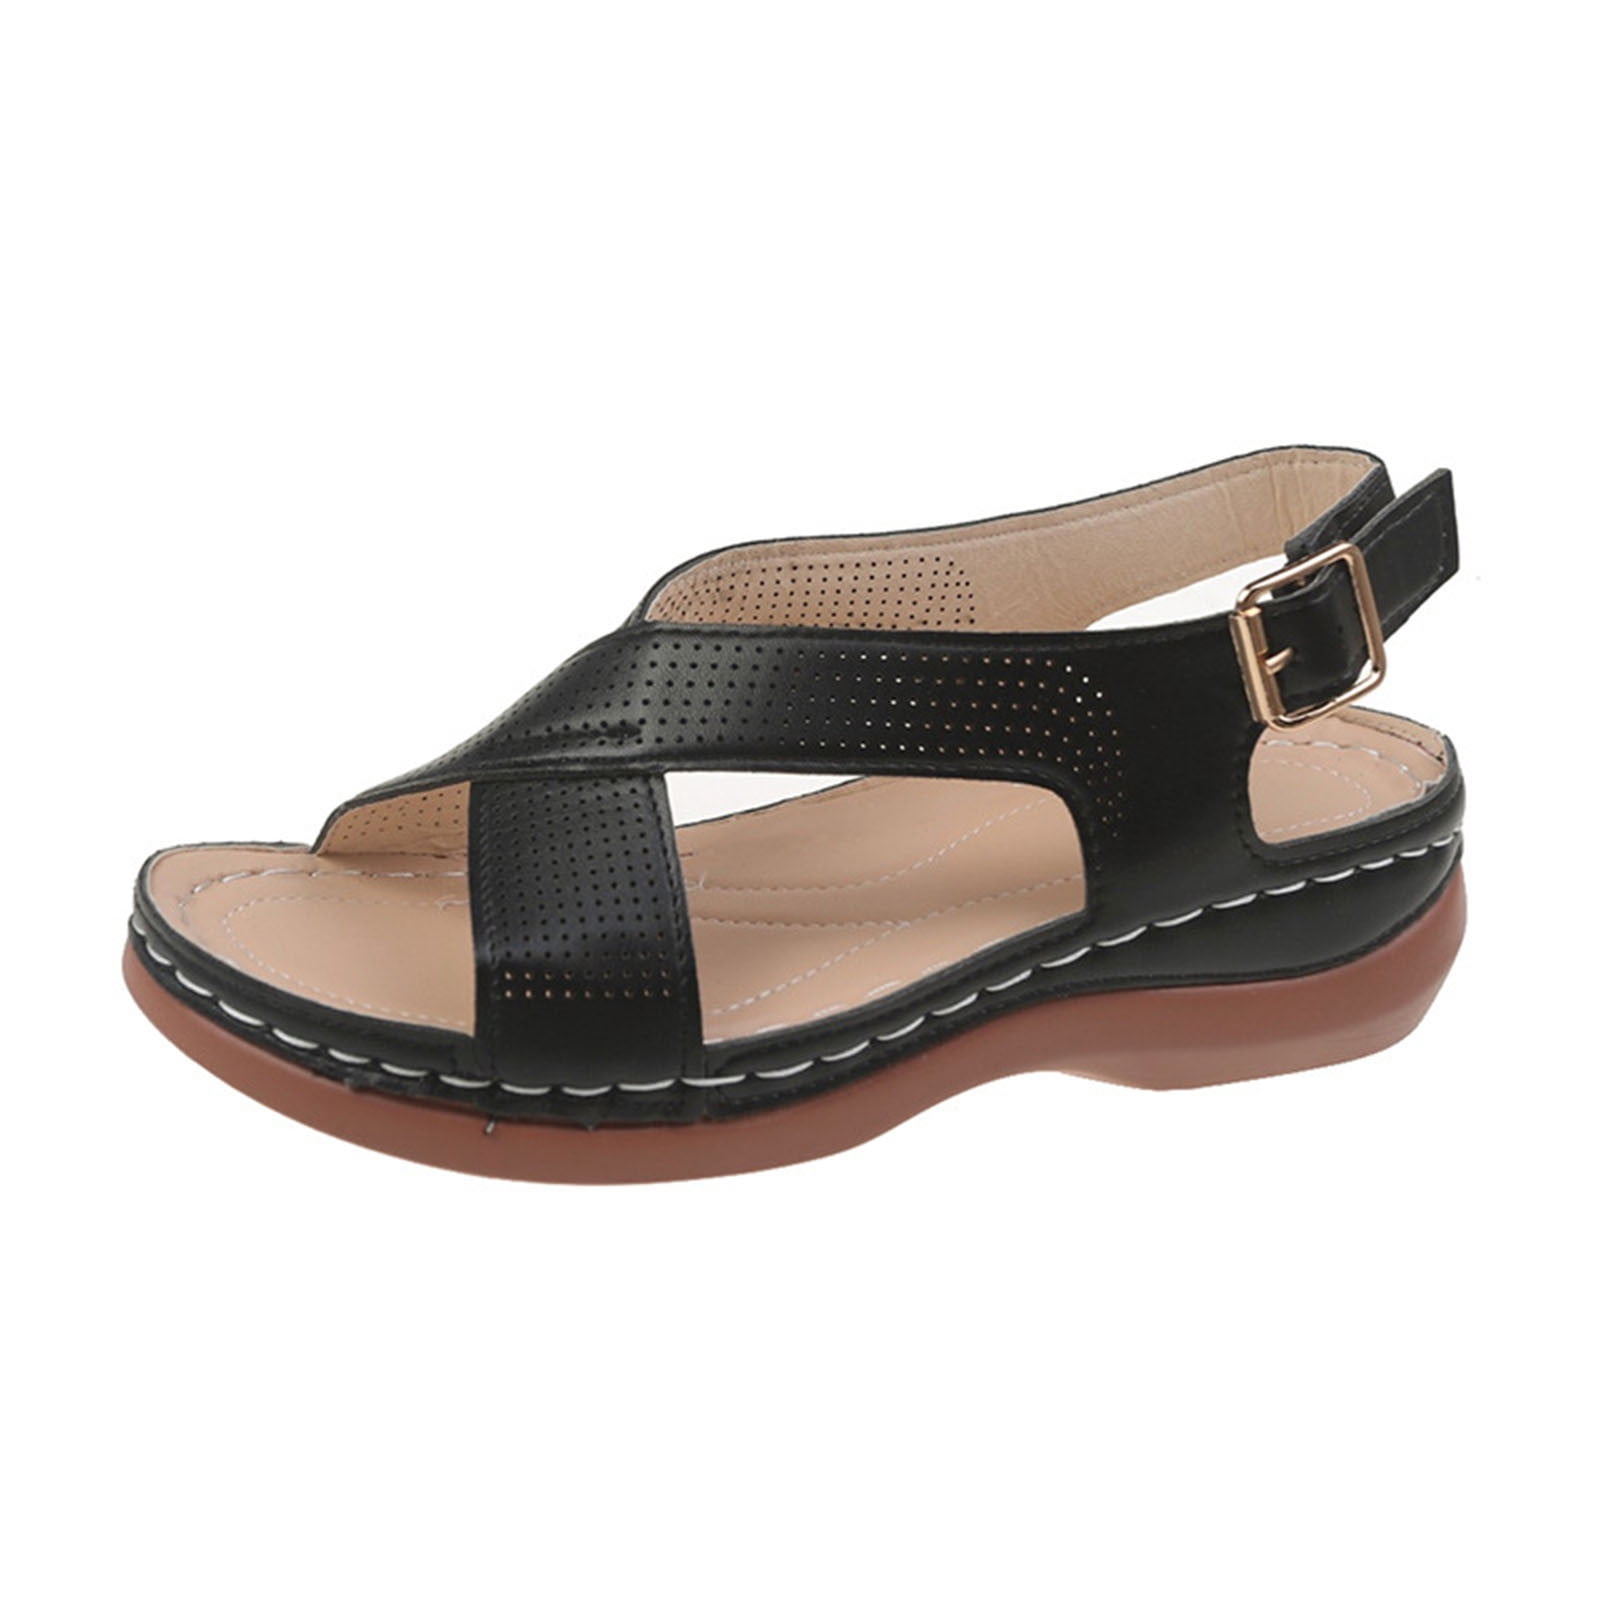 Women’s Flat Sandals, Comfort Elastic Slip-on Light Weight Slingback ...